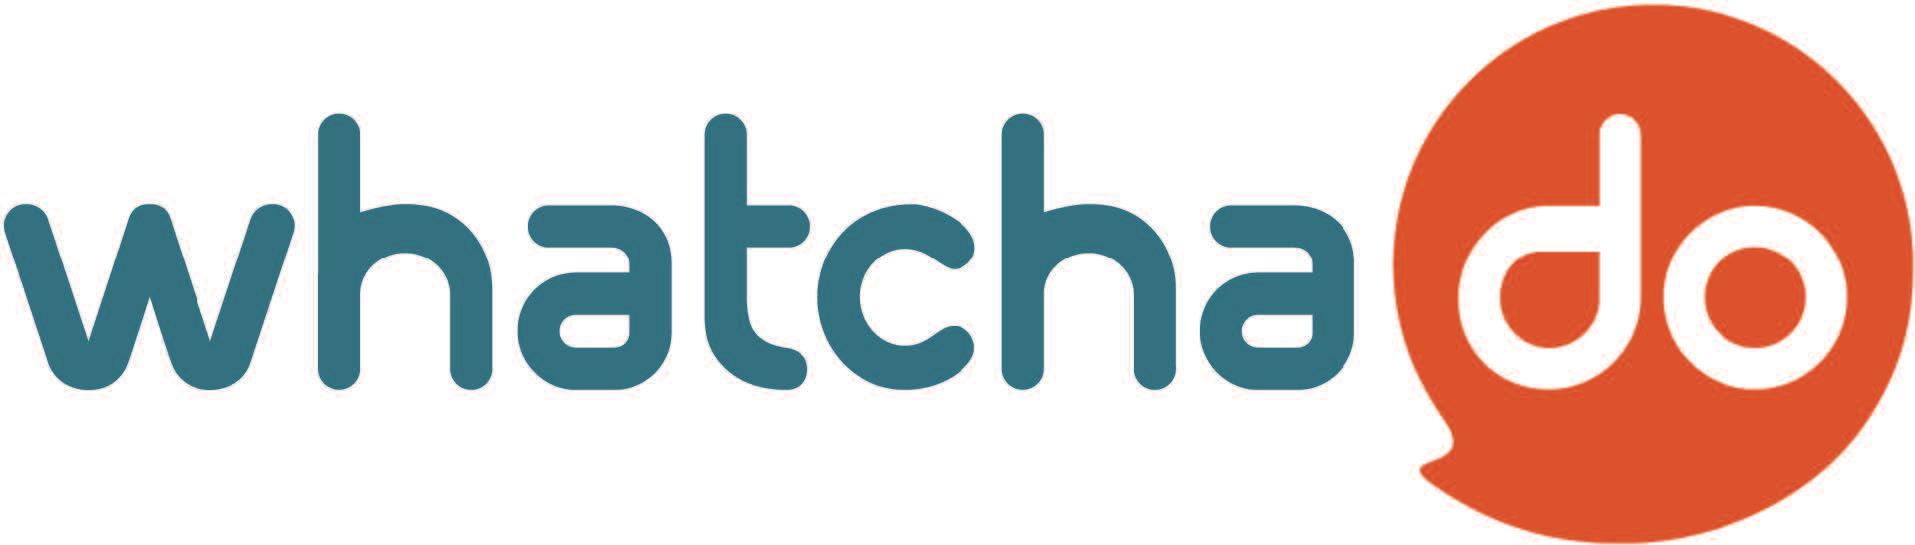 whatchado-logo